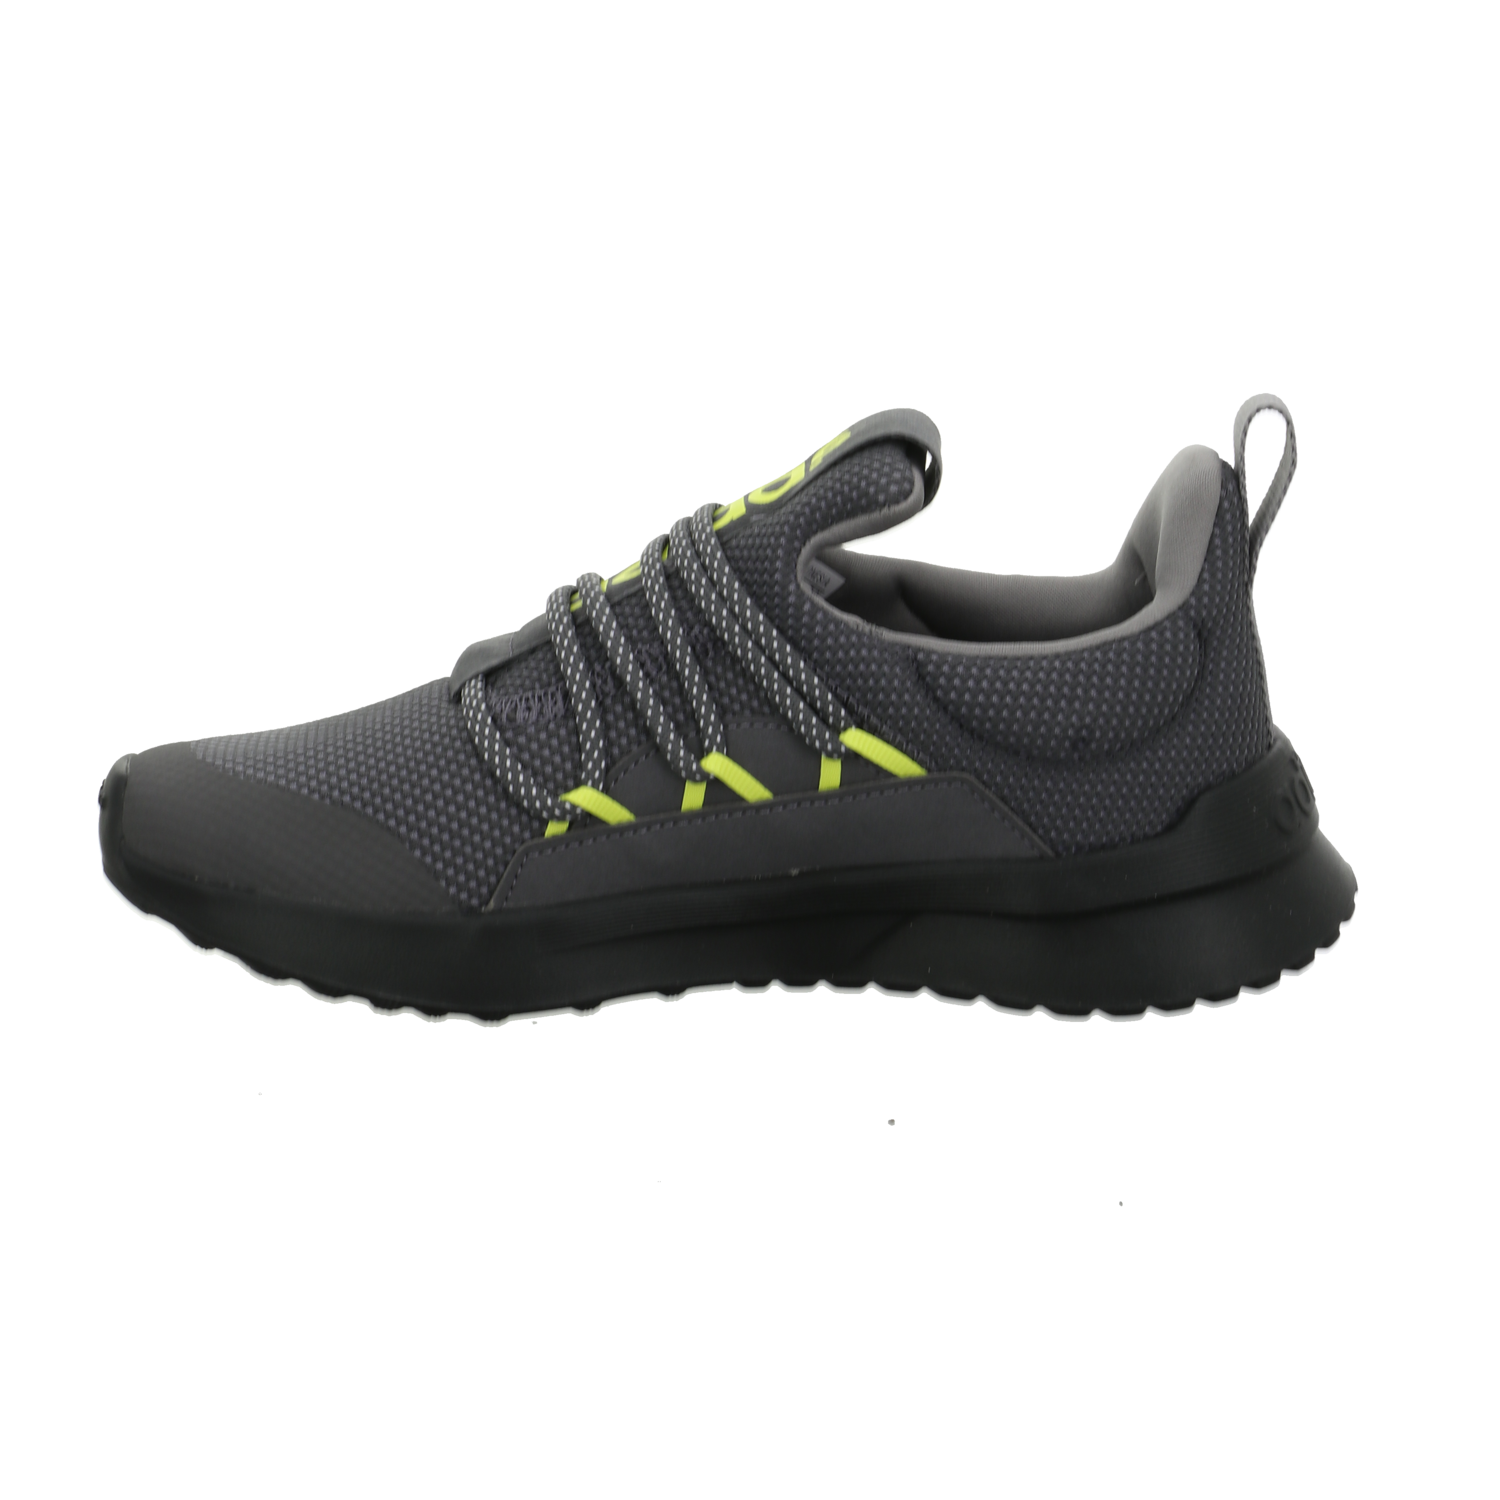 Adidas Sneaker K grau / dunkel-grau